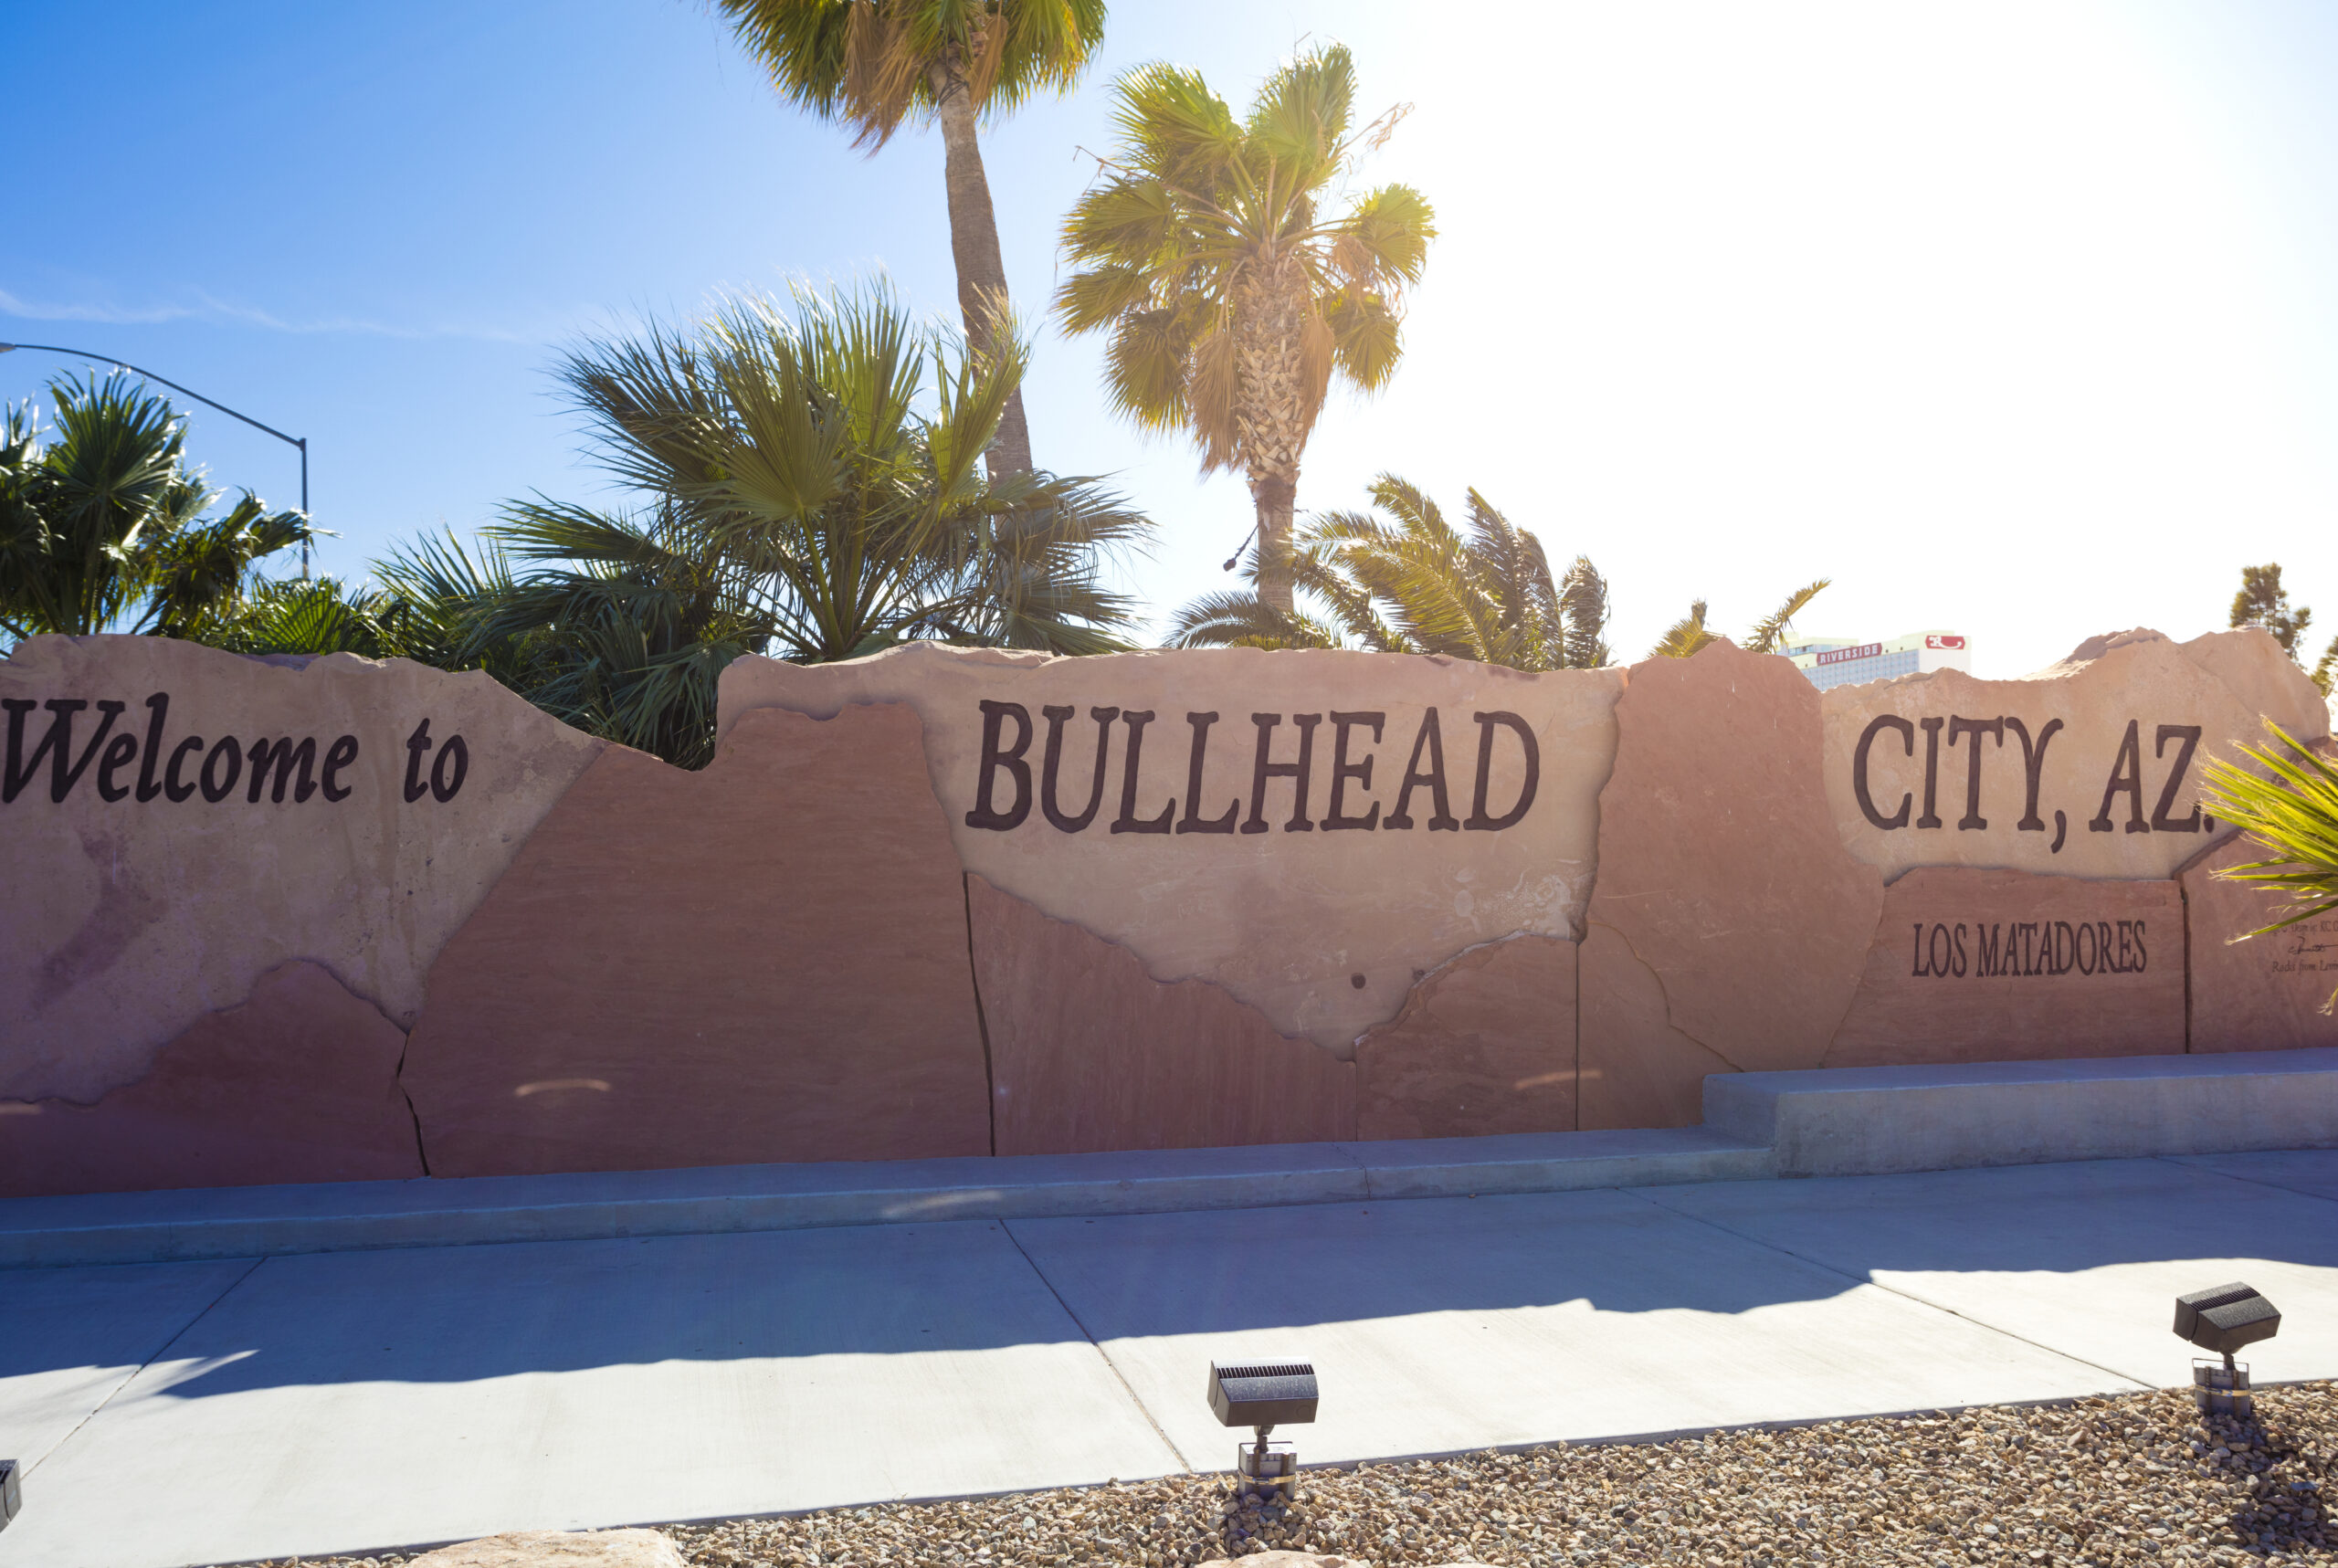 Bullhead City, AZ, USA - February 23, 2016: An editorial stock photo of the 'Welcome to Bullhead City' sign in Arizona.